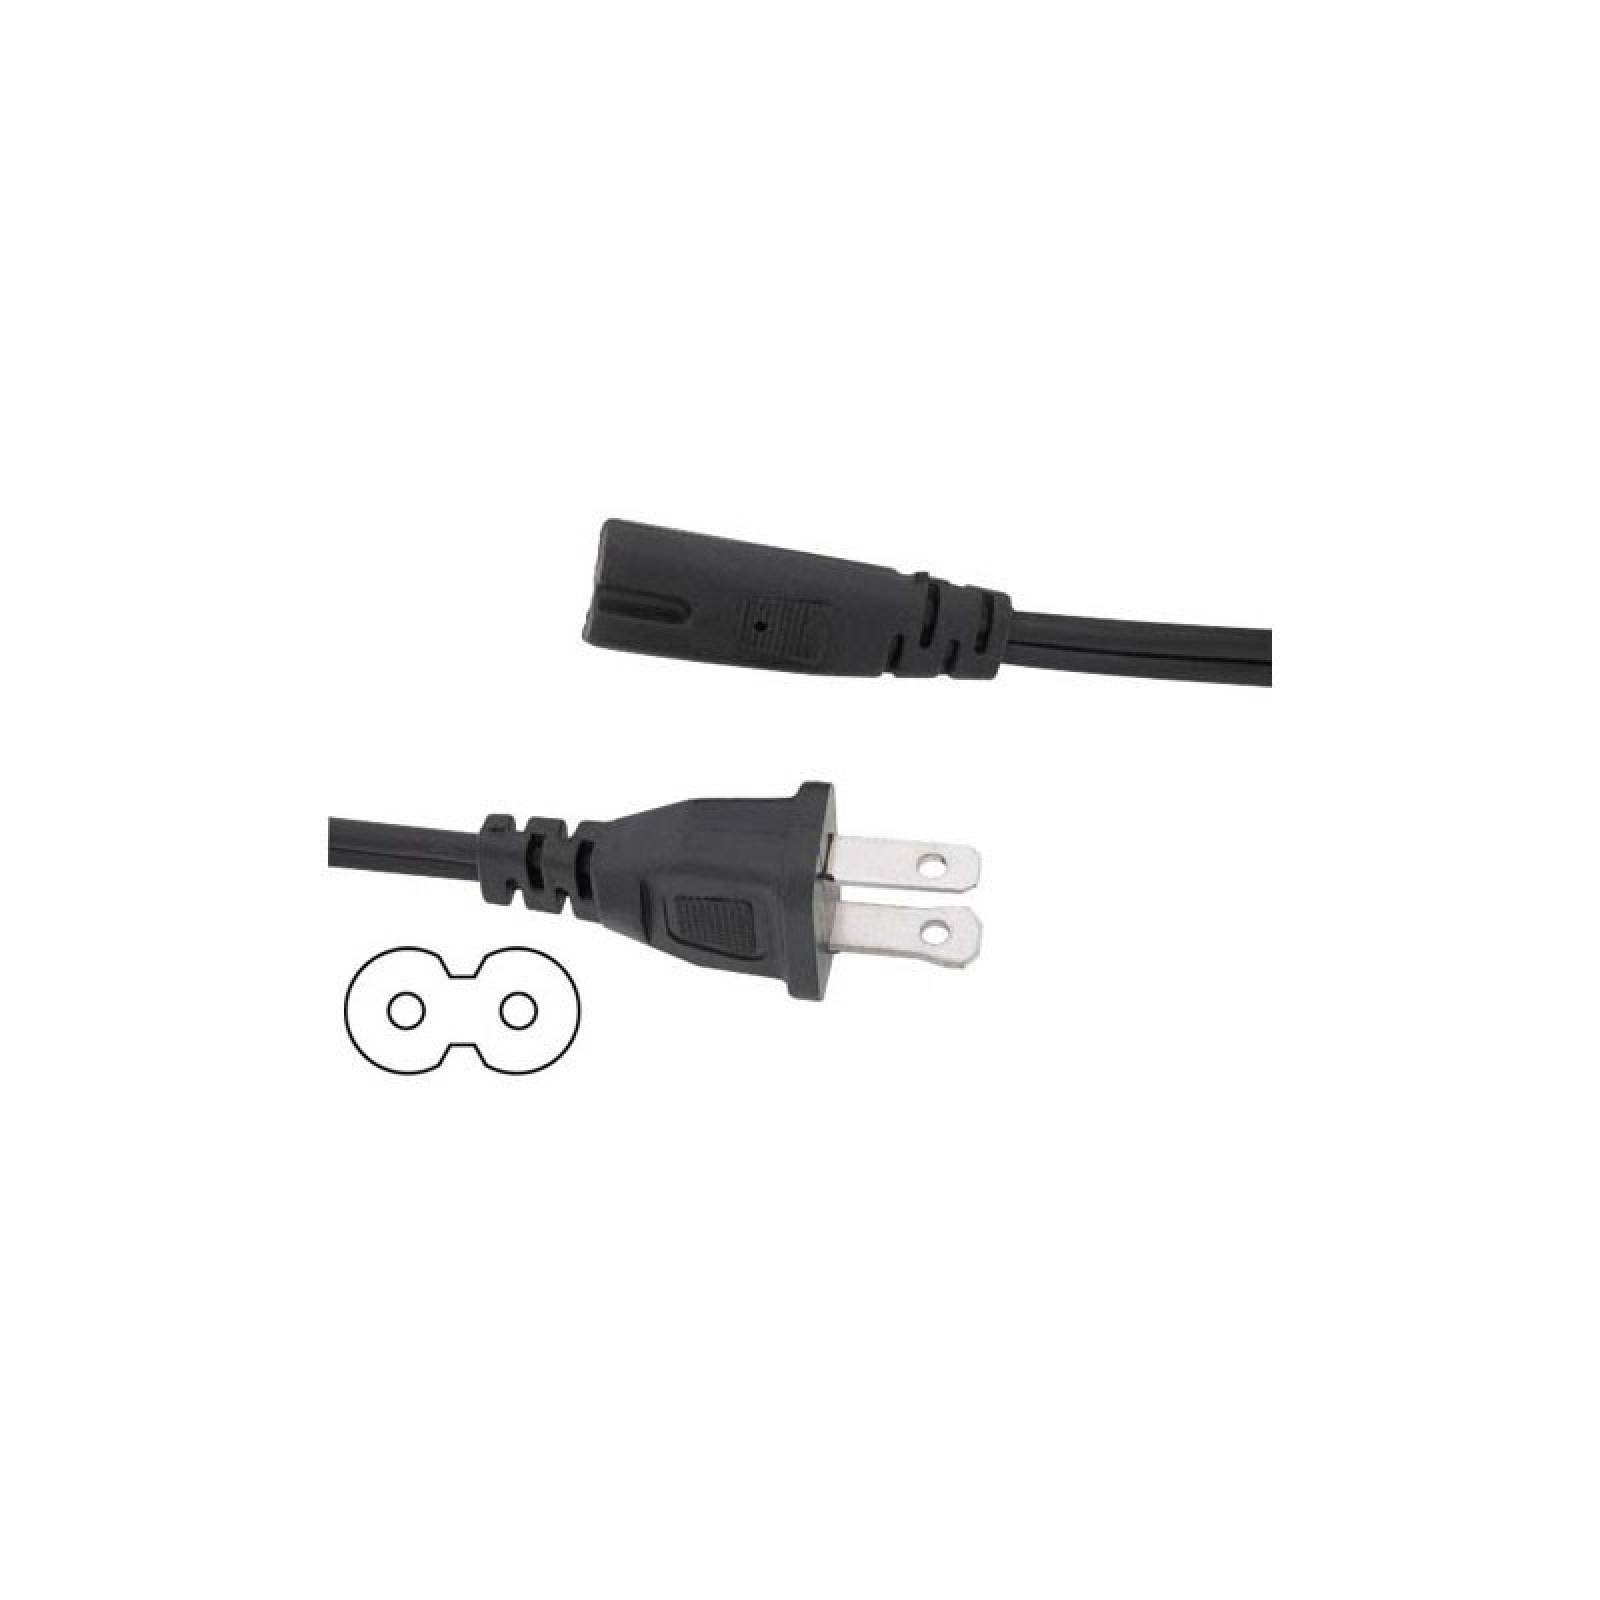 Cable Tomacorriente Interlock Universal Tipo 8 Cal18 